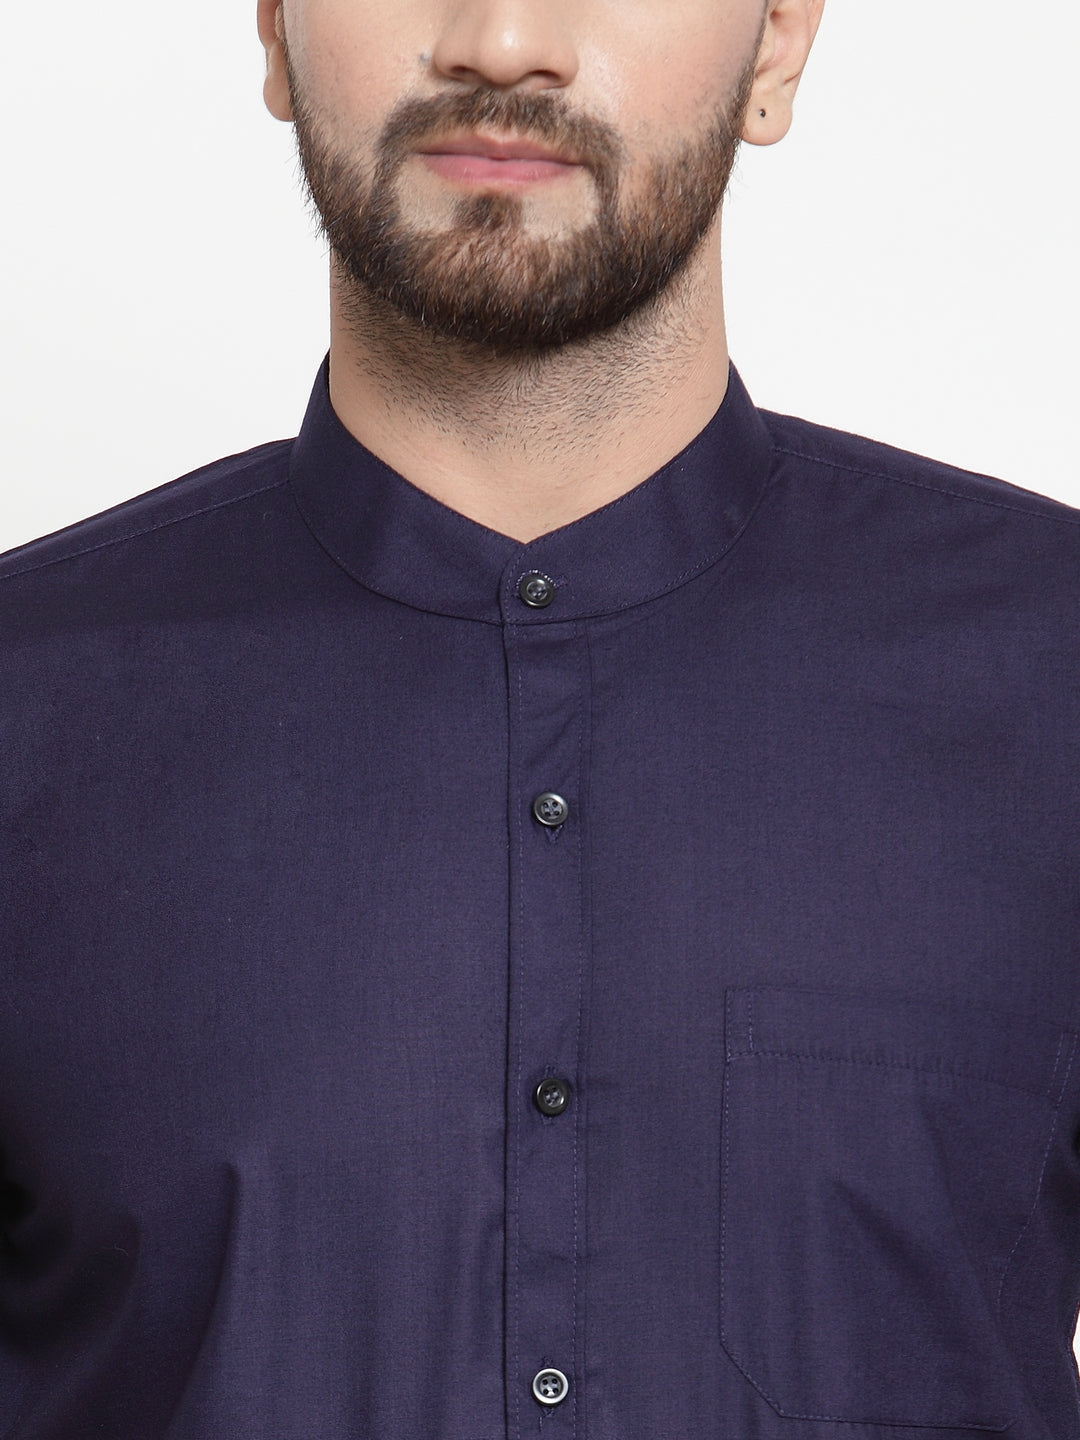 Men's Navy Cotton Solid Mandarin Collar Formal Shirts ( SF 726Navy ) - Jainish